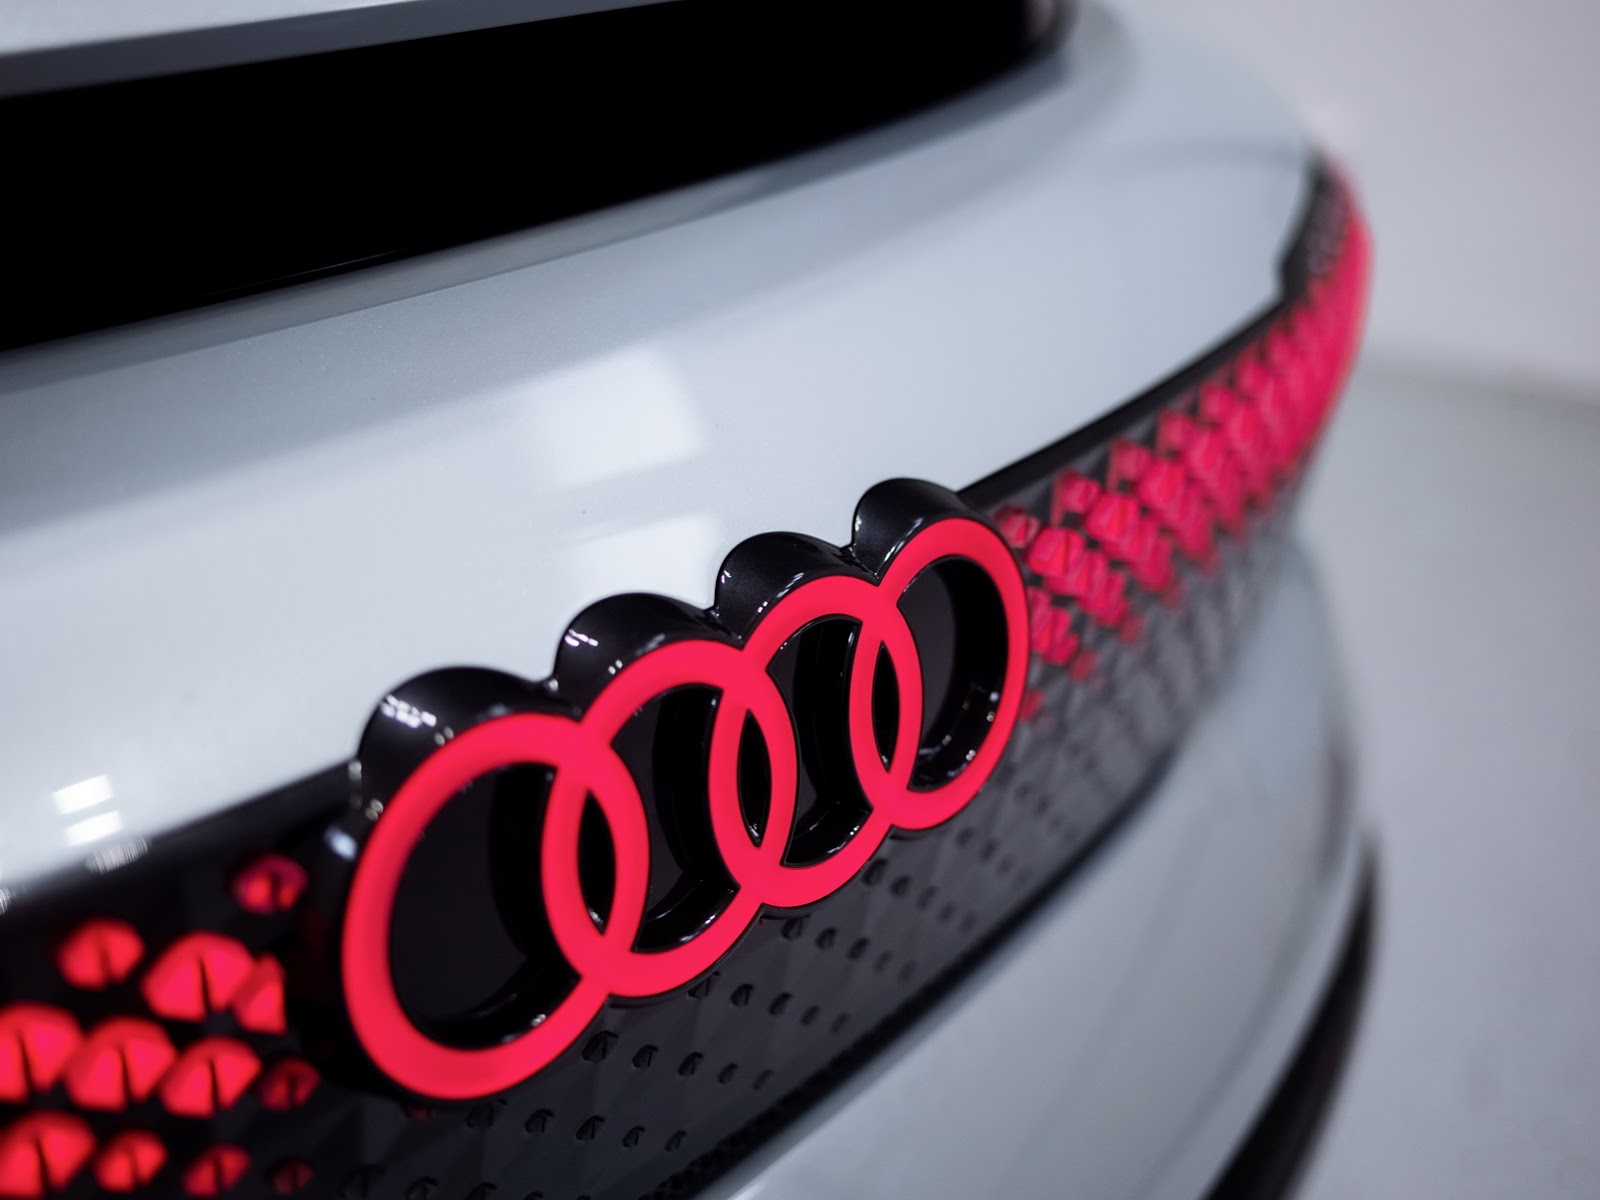 Audi Aicon Concept, 2017 - Detail